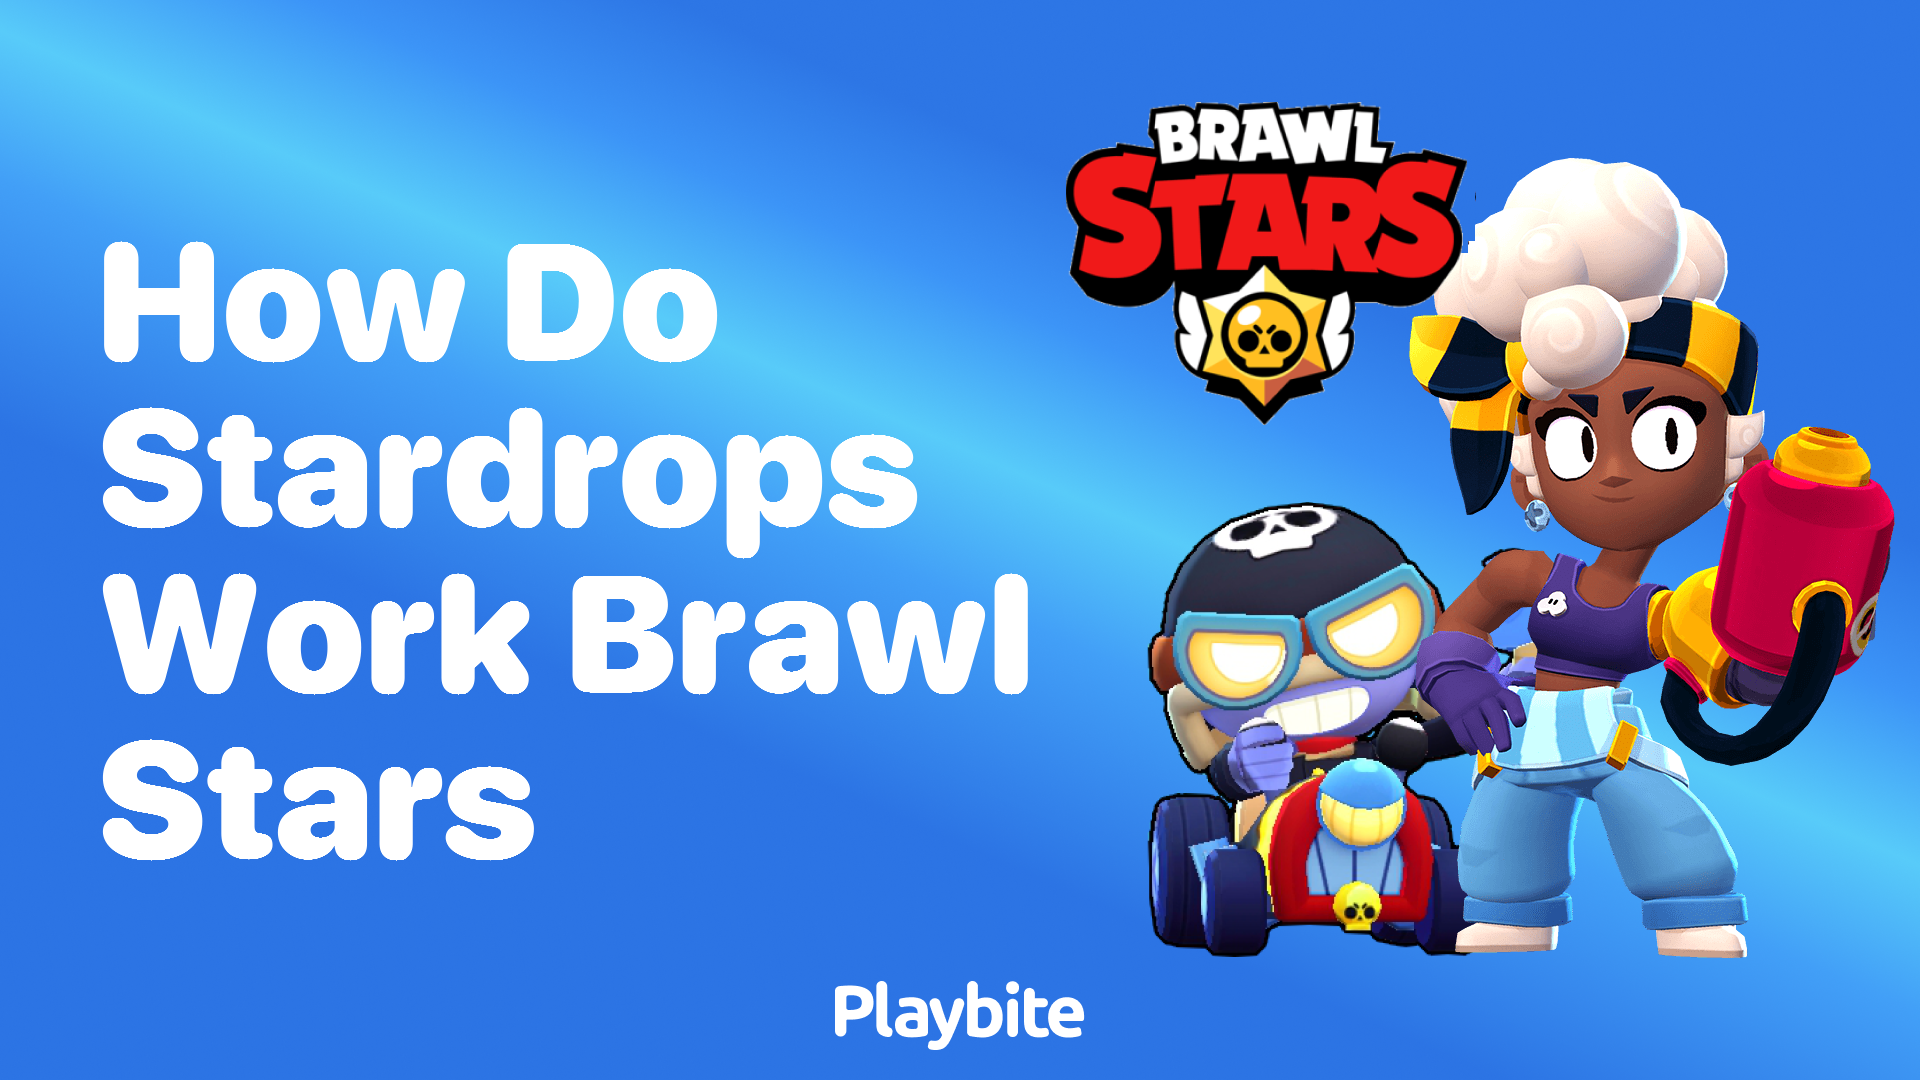 How Do Stardrops Work in Brawl Stars?